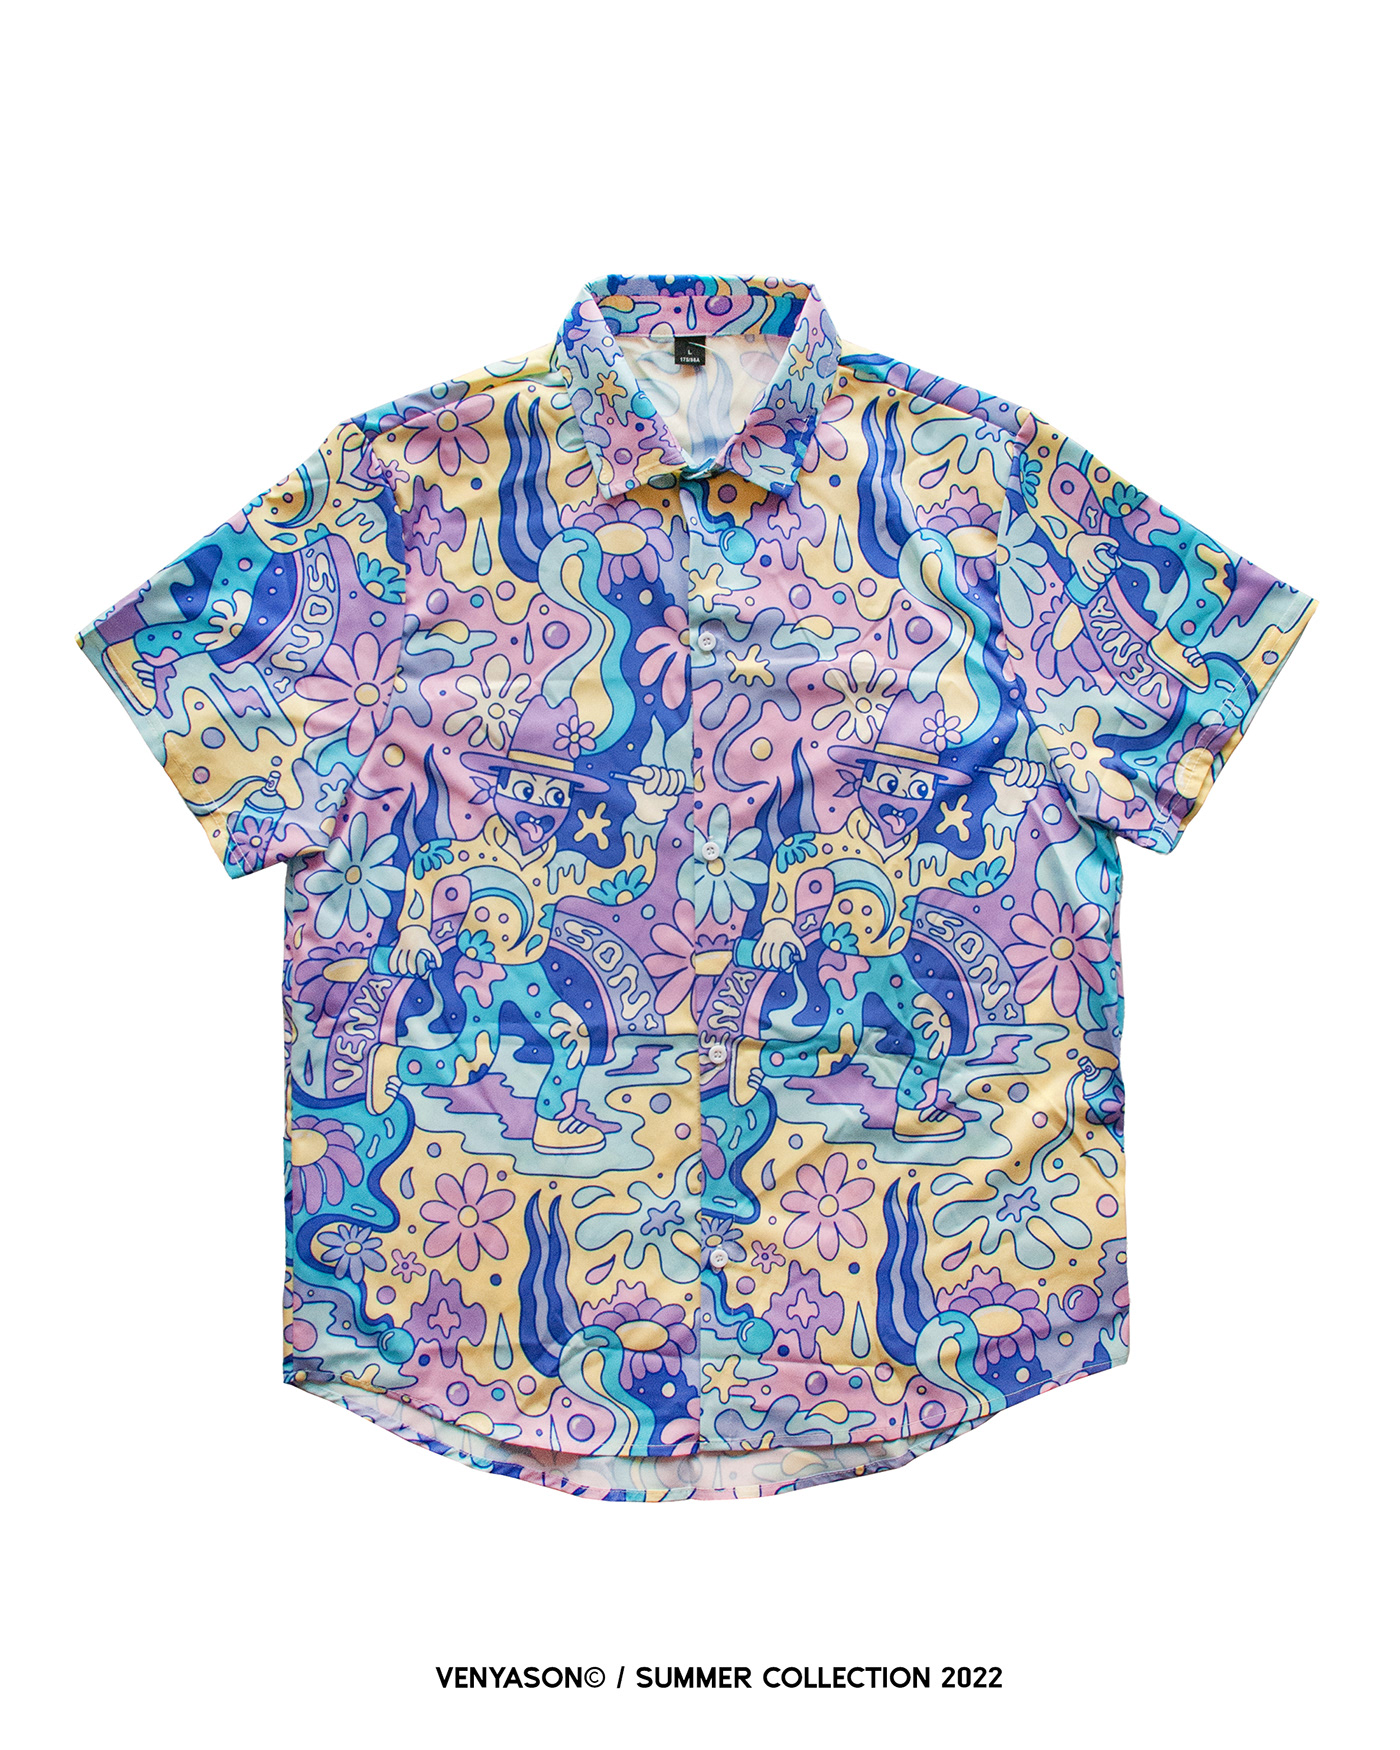 420 art apparel Clothing clothing brand ILLUSTRATION  pattern print print design  Summer wear venyason